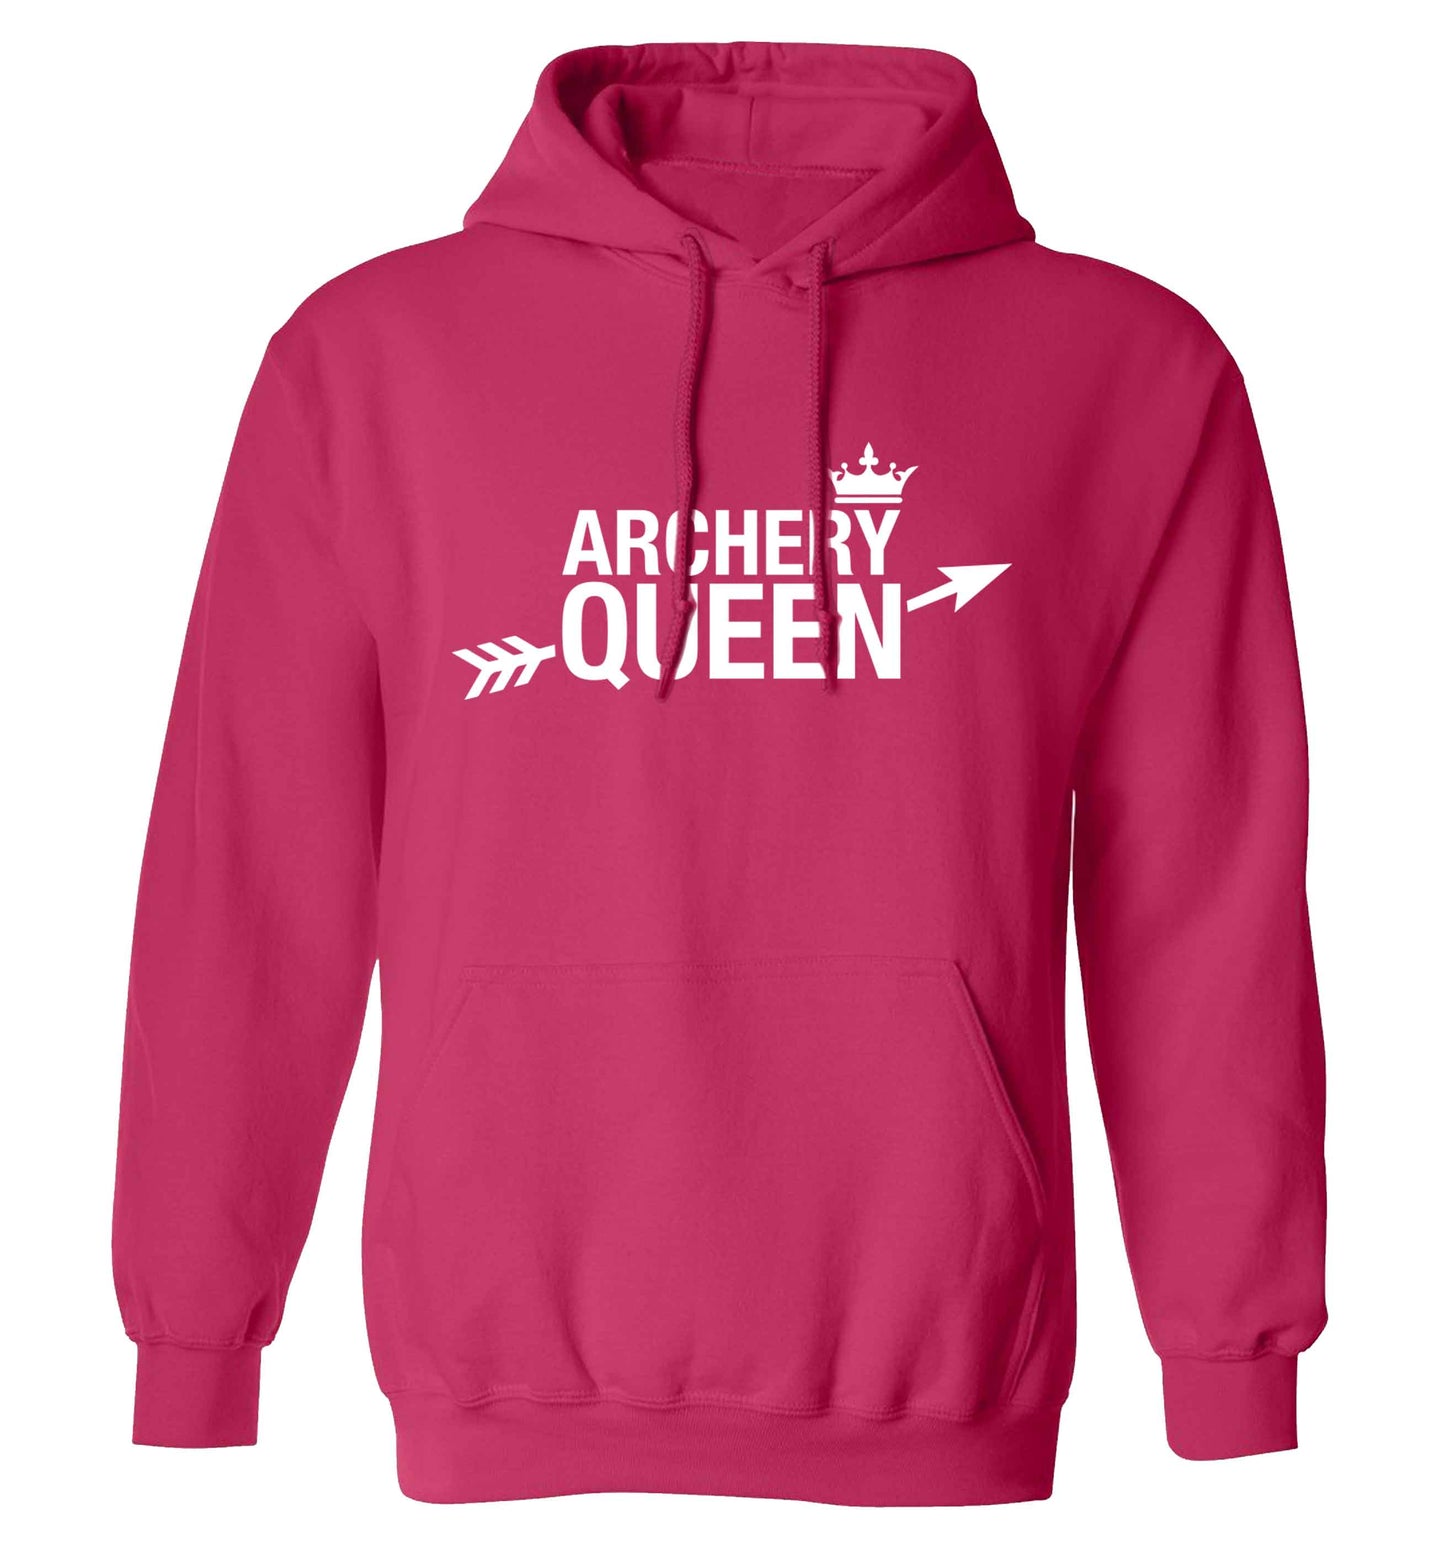 Archery queen adults unisex pink hoodie 2XL